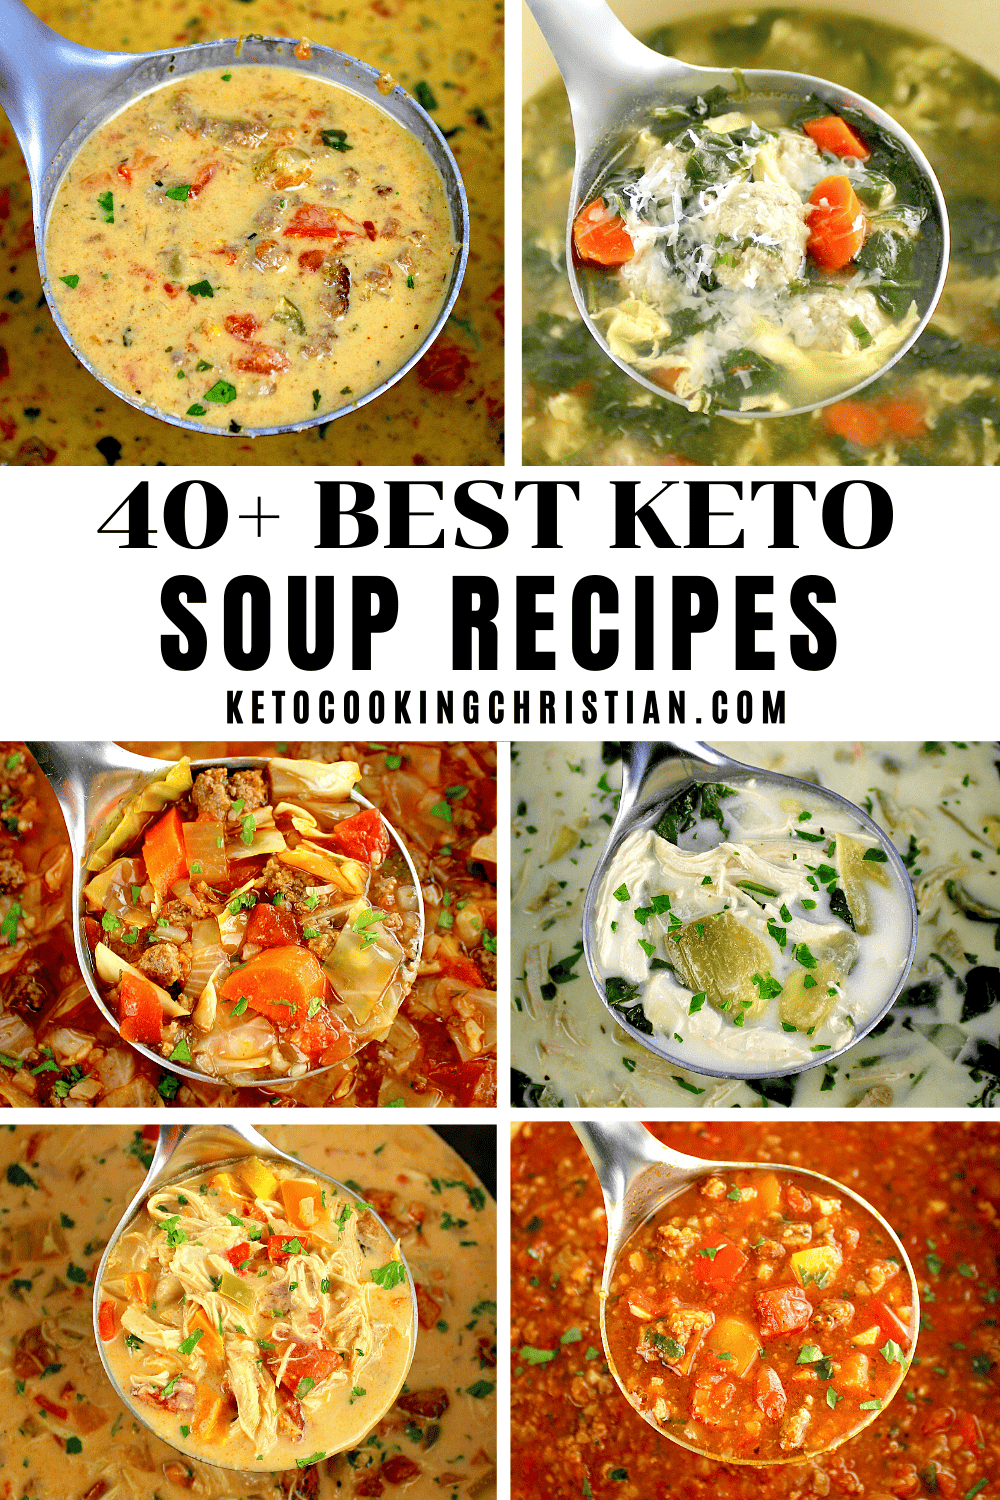 40+ Best Keto Soup Recipes pin